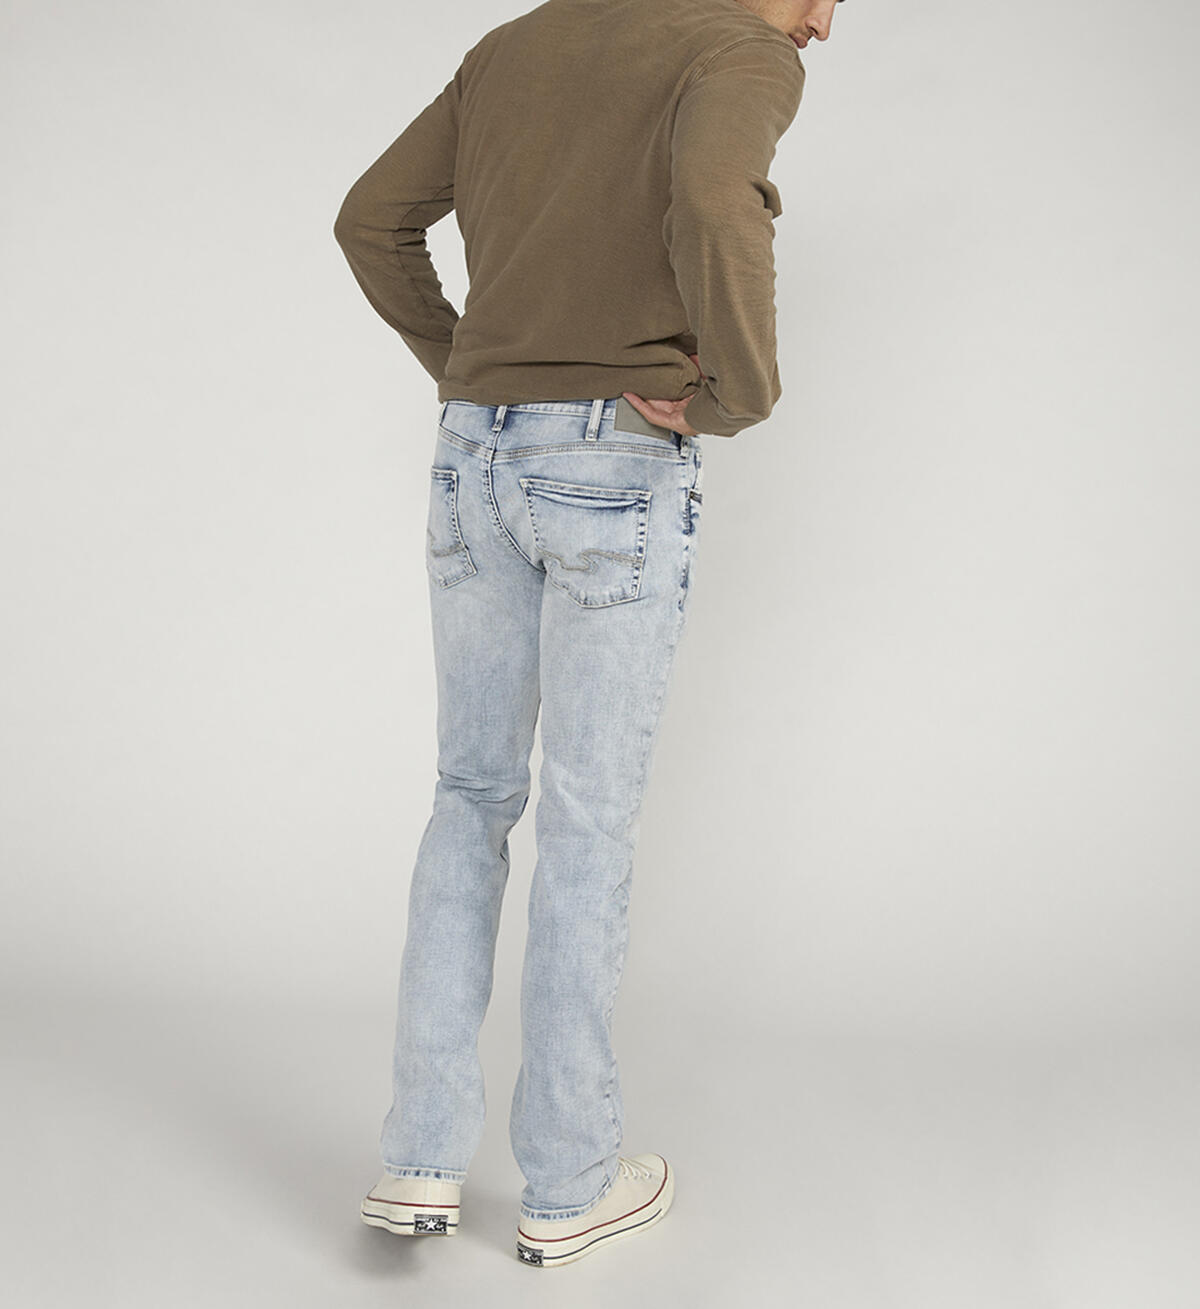 Allan Slim Fit Straight Leg Jeans, Indigo, hi-res image number 1